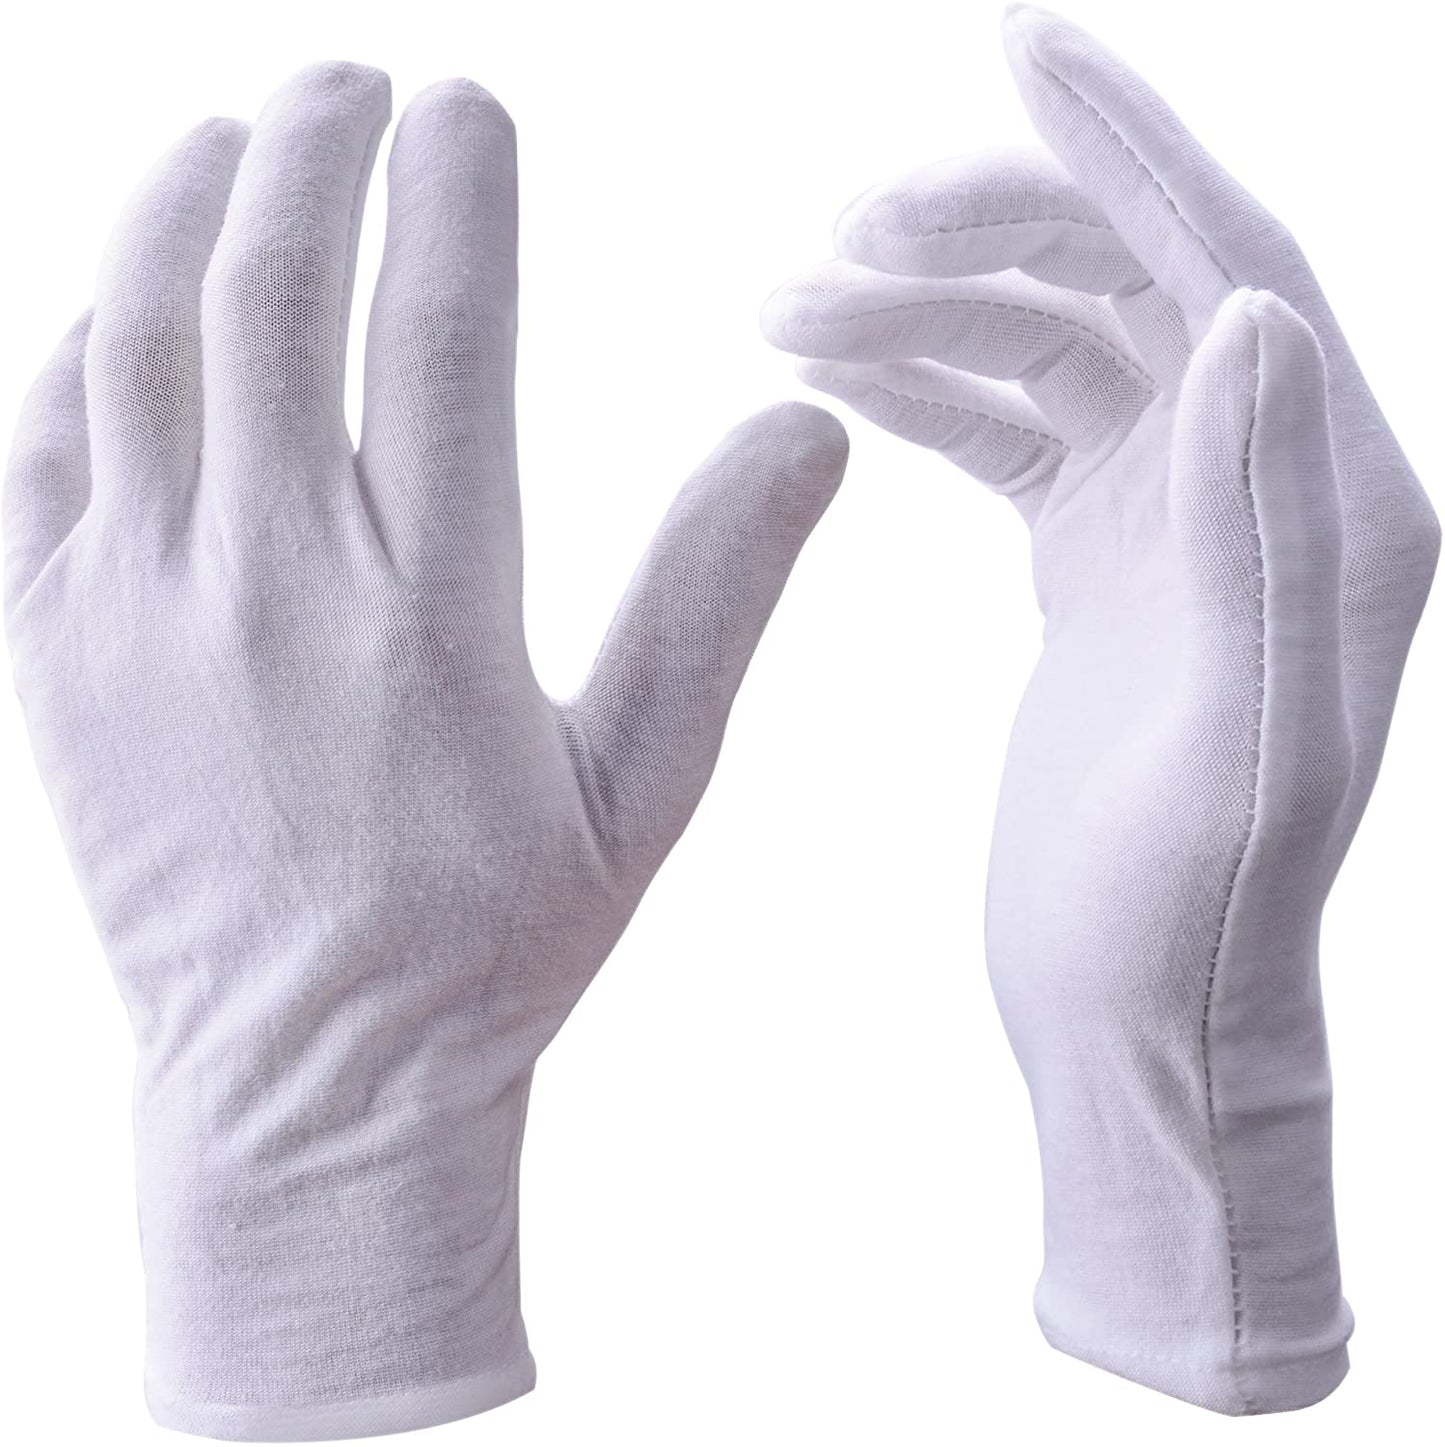 White Cotton Gloves 6 Pack